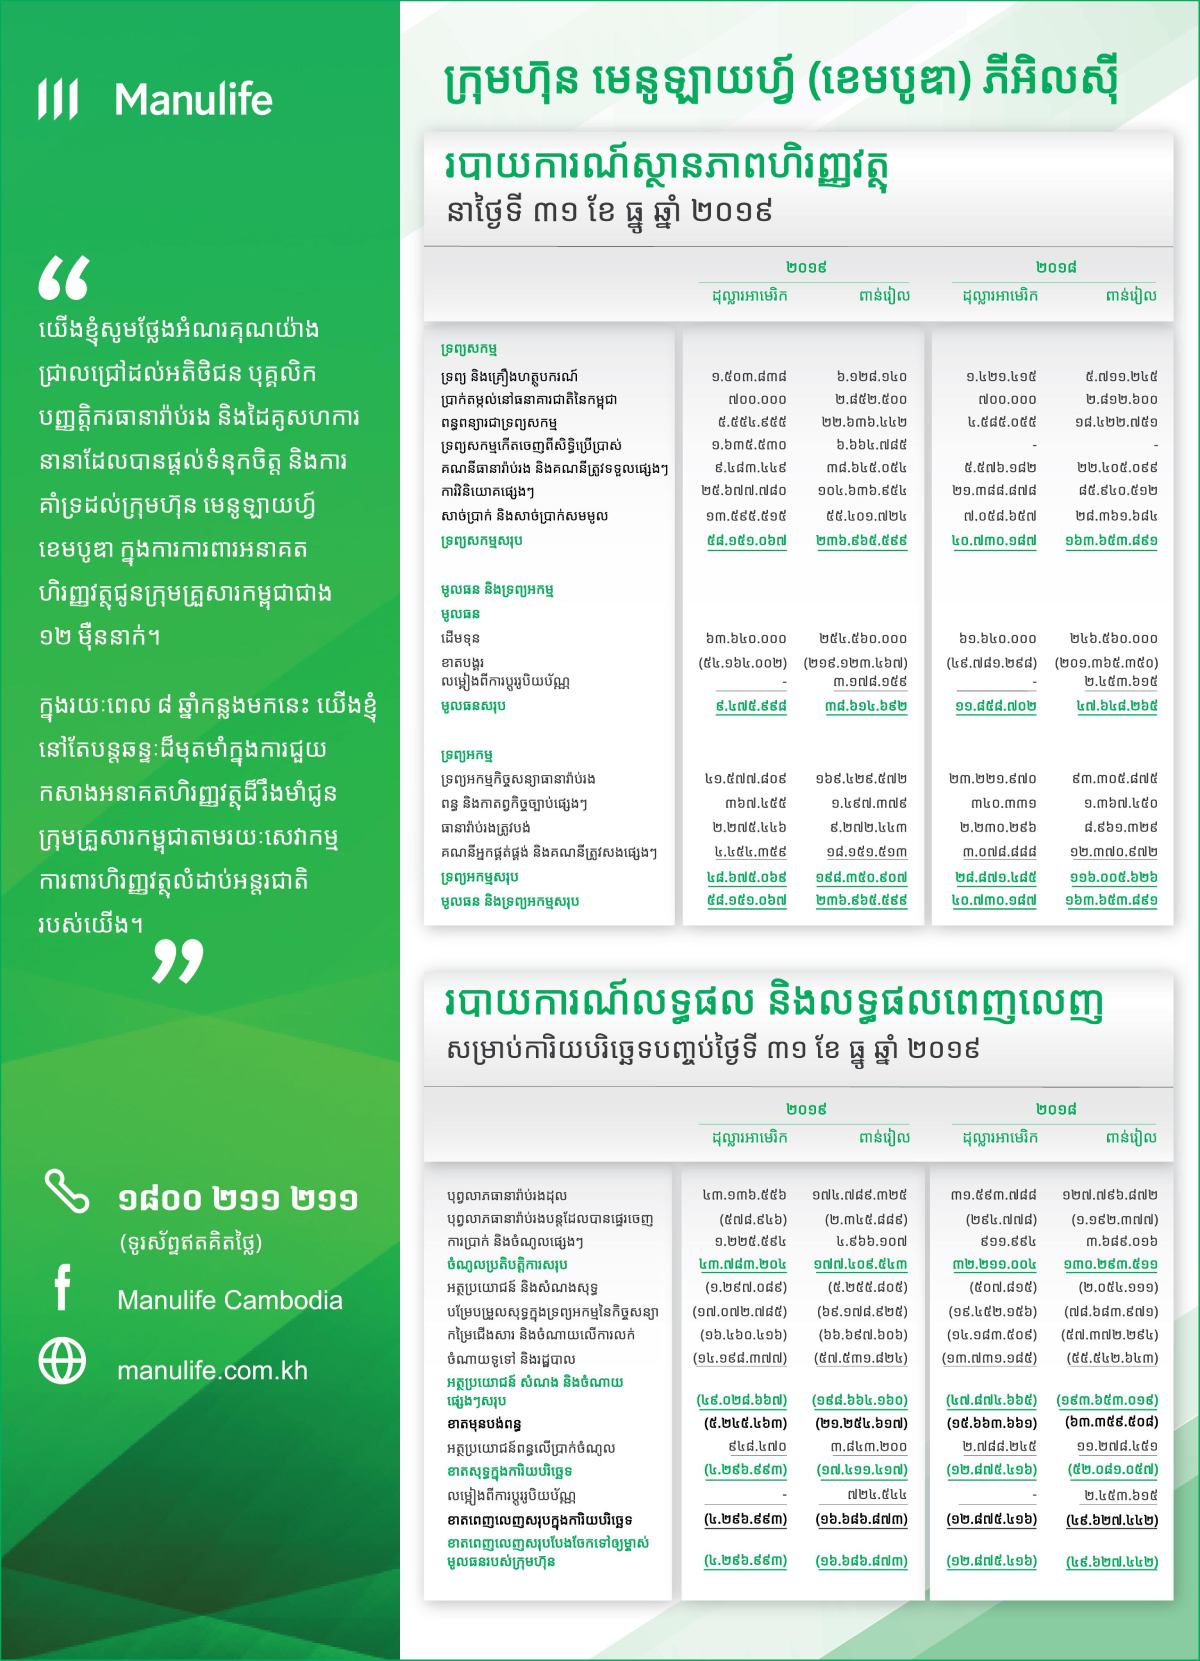 financial report 2019-manulife cambodia-life insurance-km